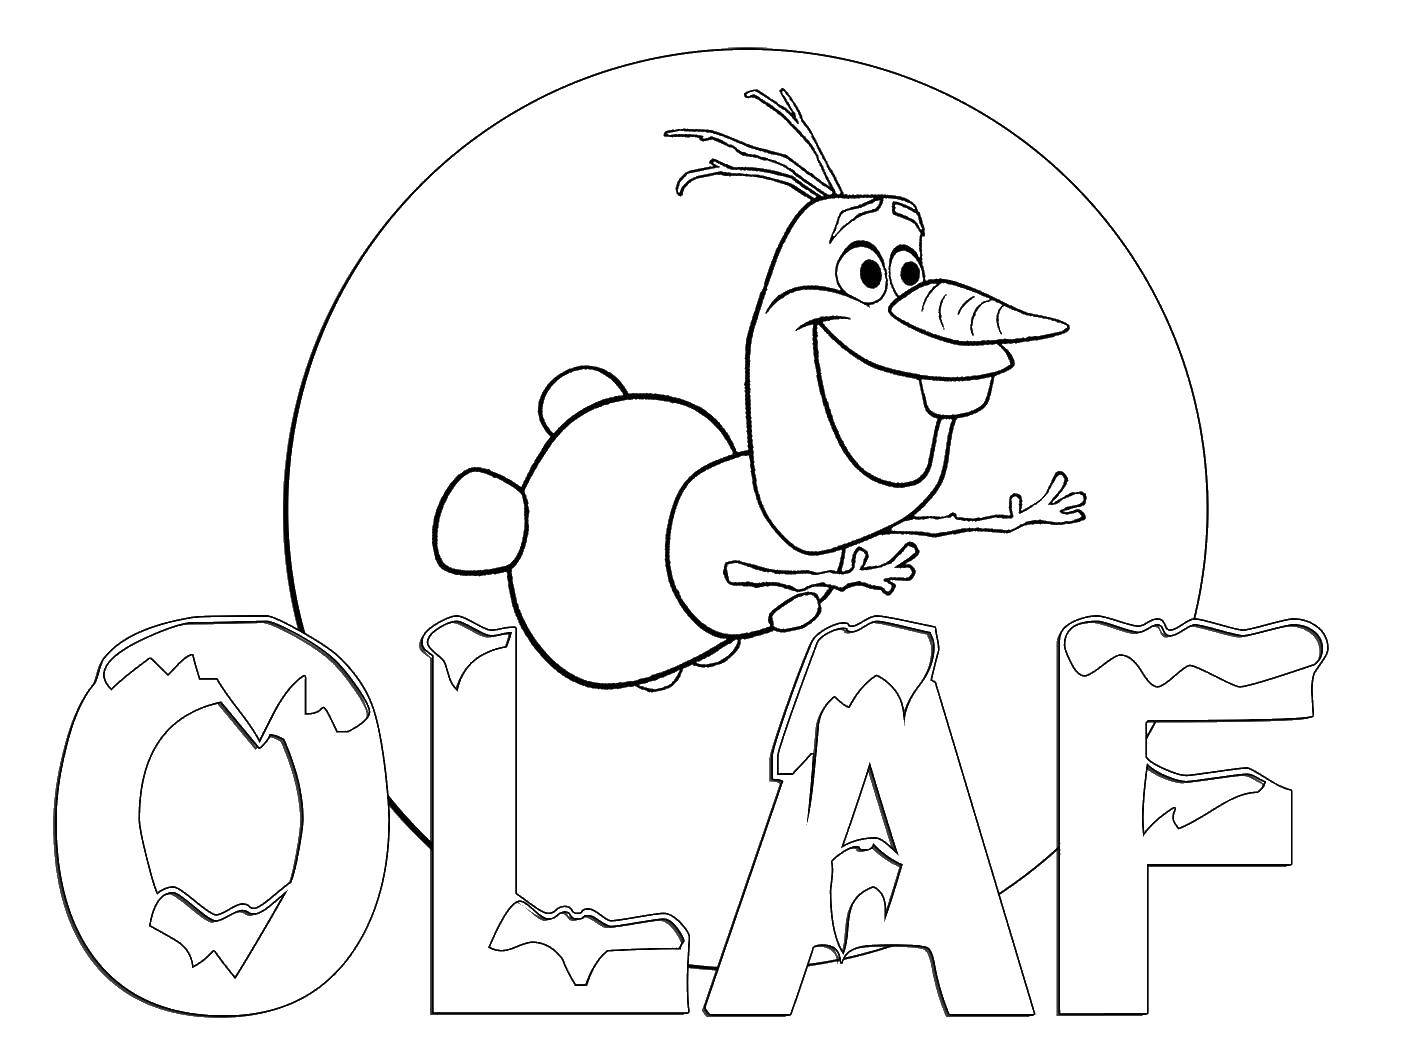 Coloring Olaf. Category Disney cartoons. Tags:  Olaf.